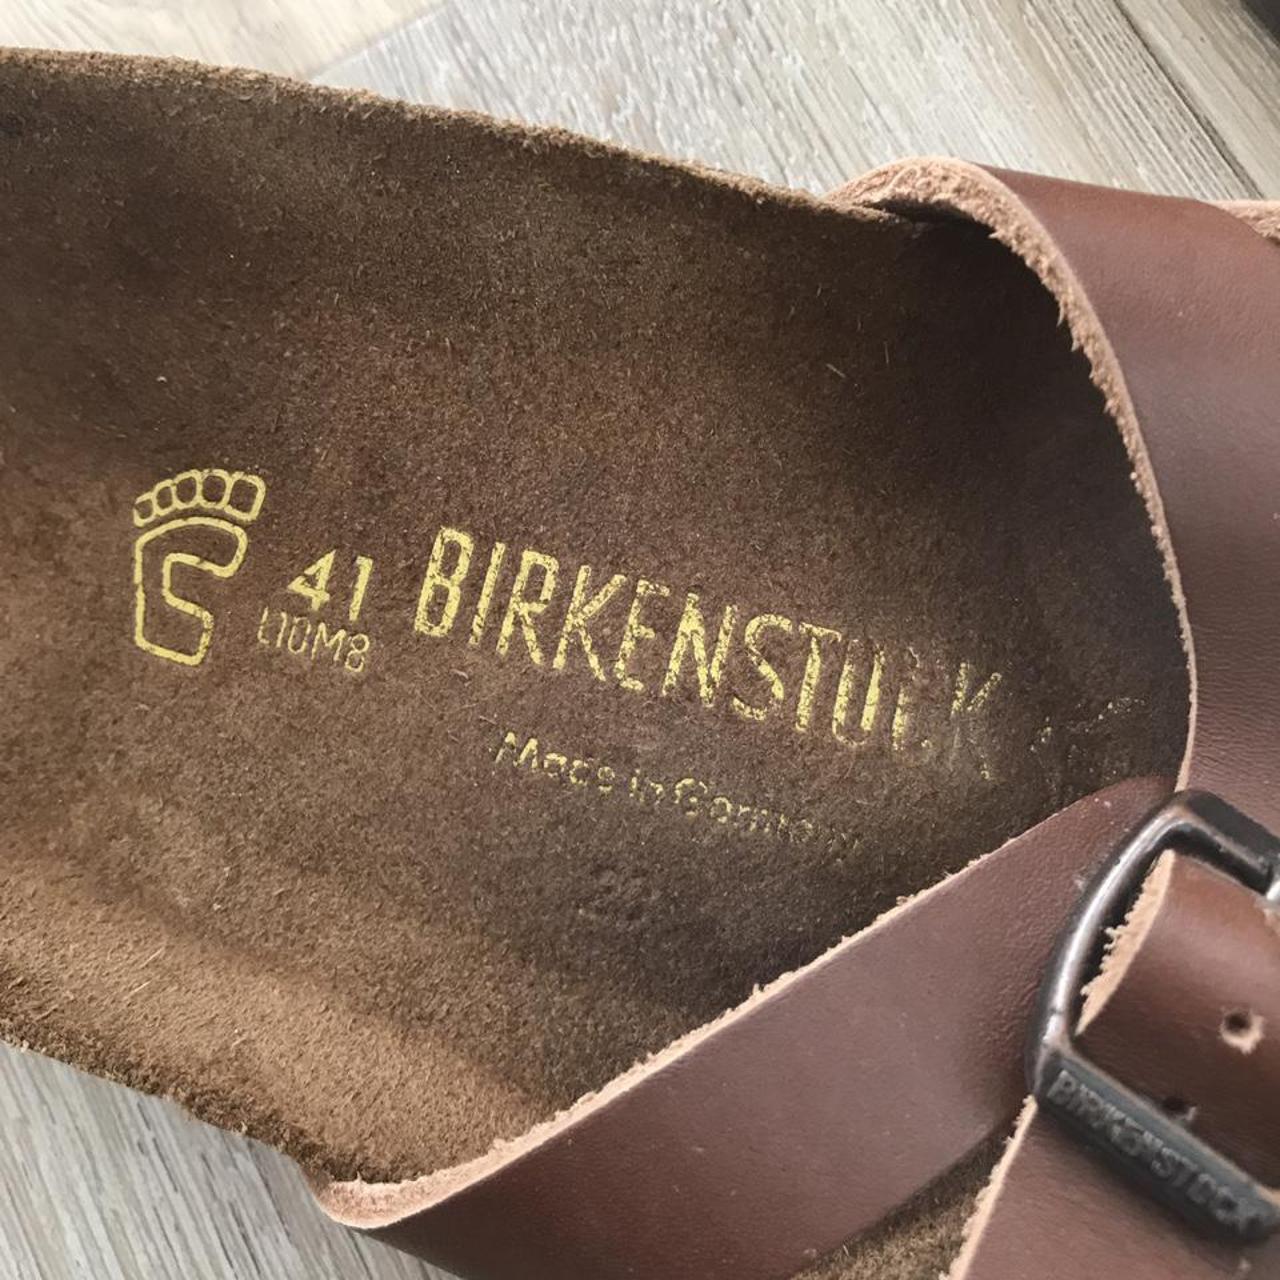 Product Image 4 - Birkenstock Sandal Shoes

- Size 41
-